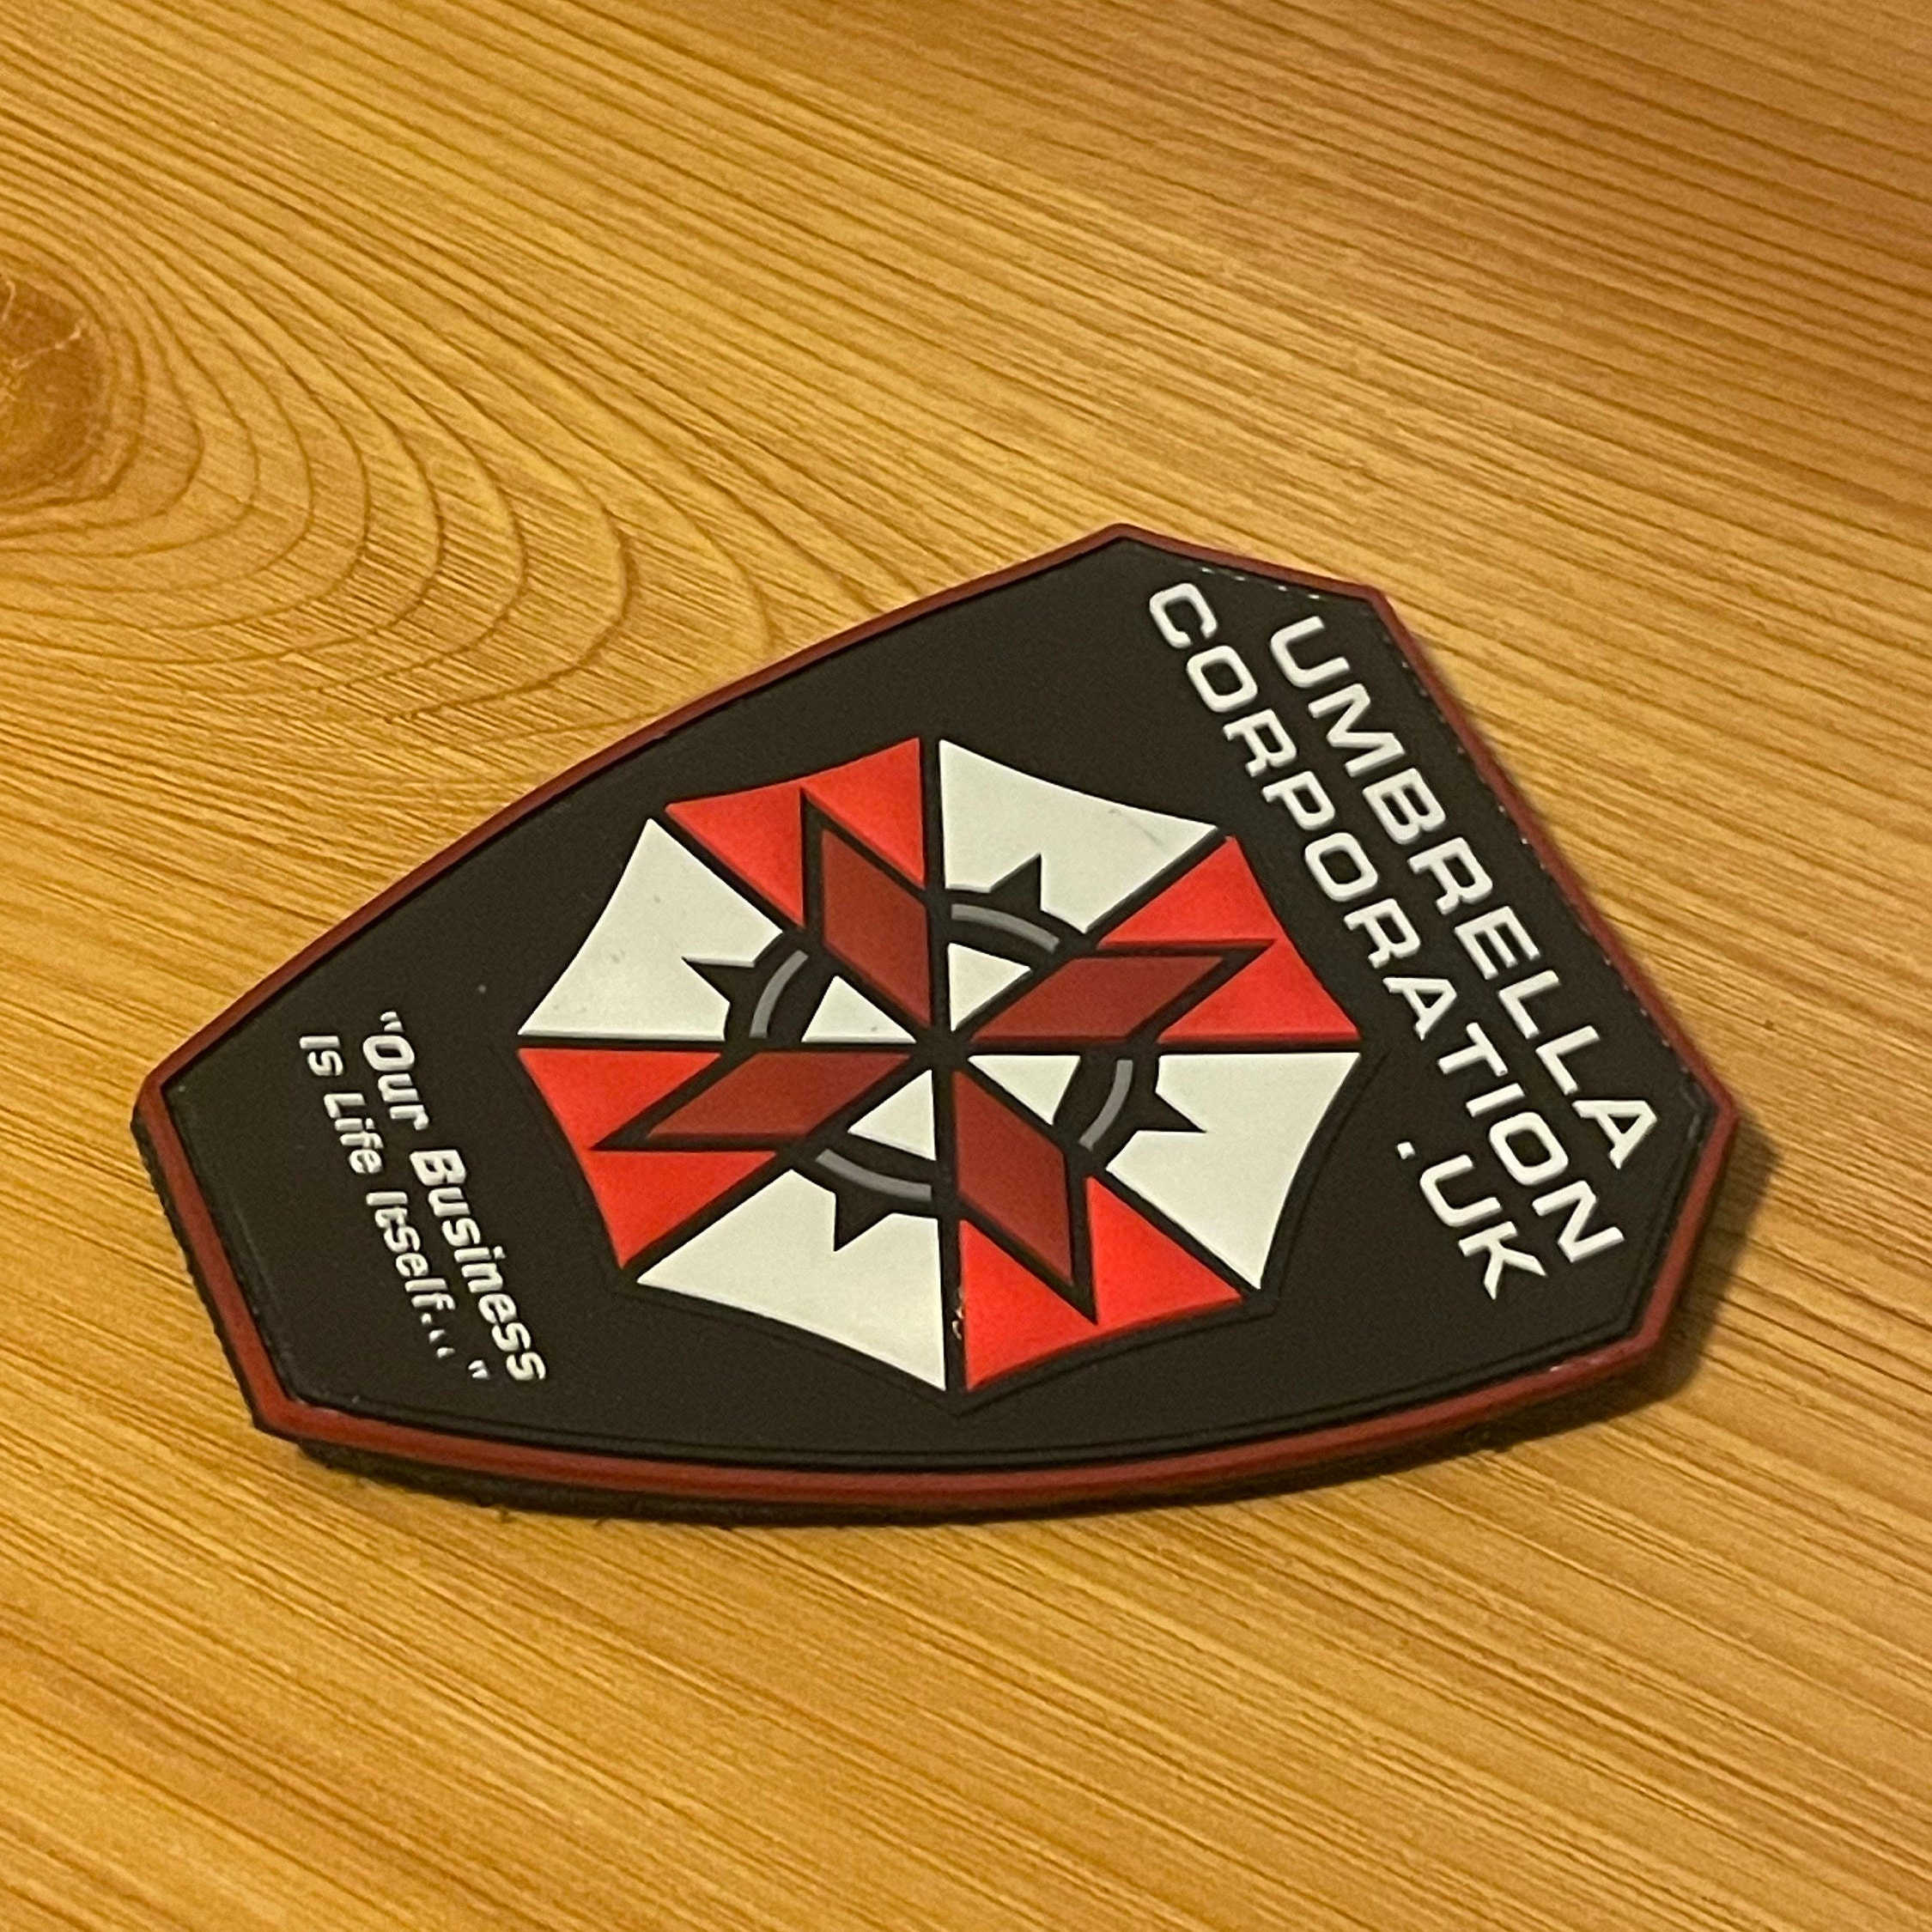 Resident Evil Umbrella Corporation Patch